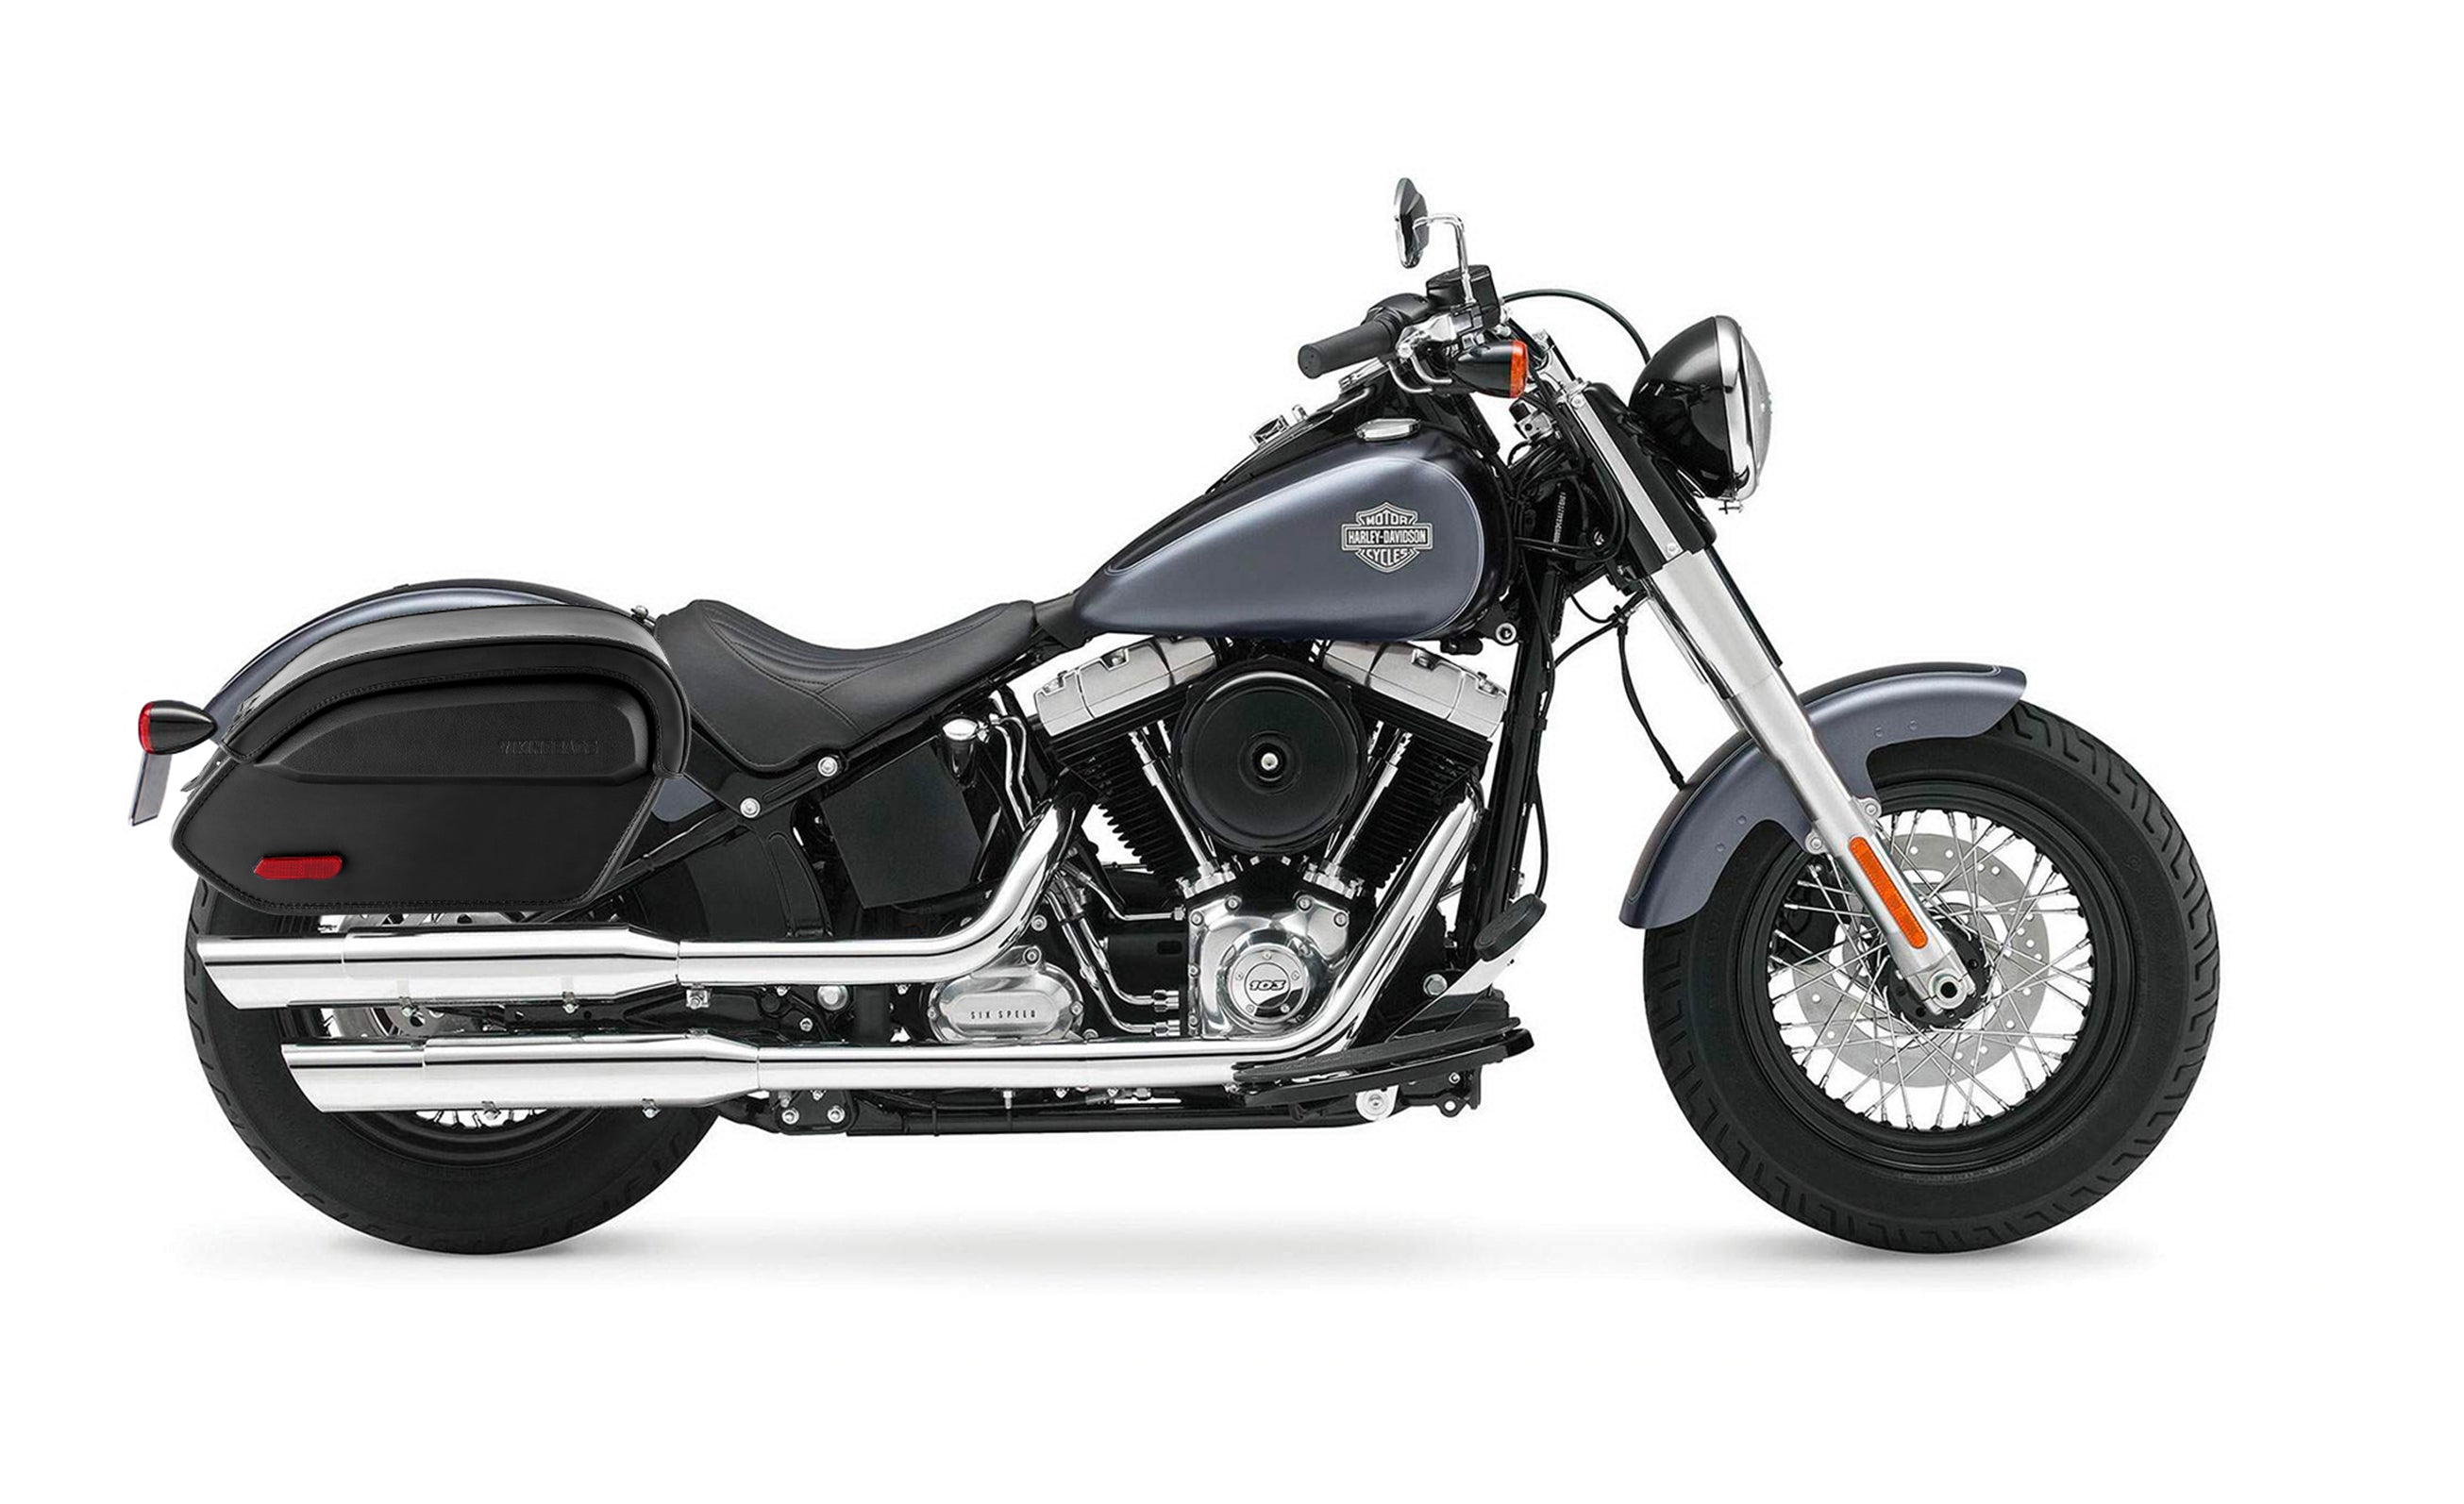 24L - Aviator Large Leather Motorcycle Saddlebags for Harley Softail Slim FLS on Bike Photo @expand